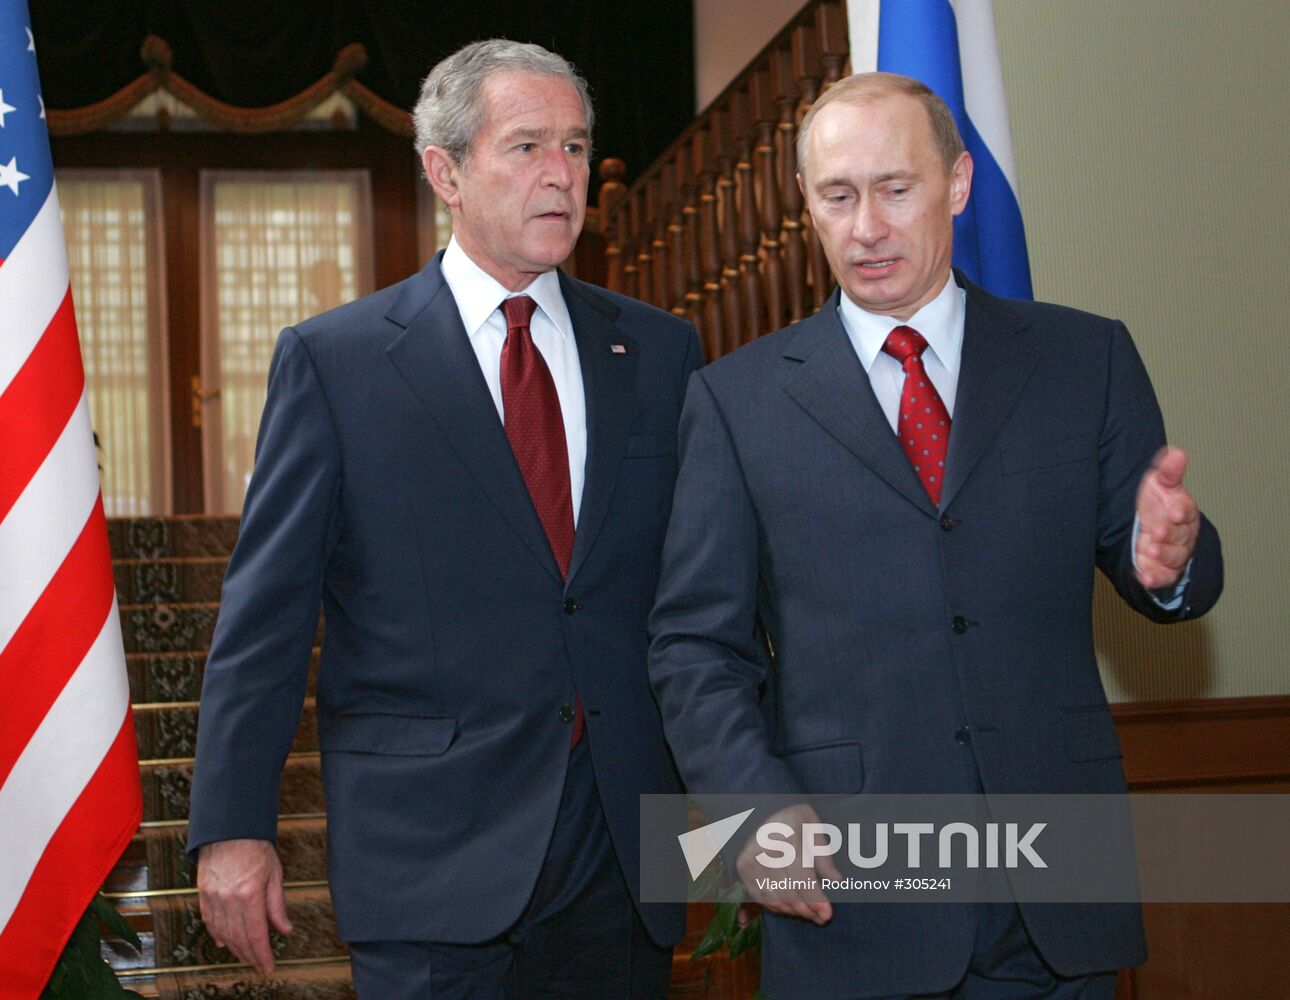 George Bush and Vladimir Putin